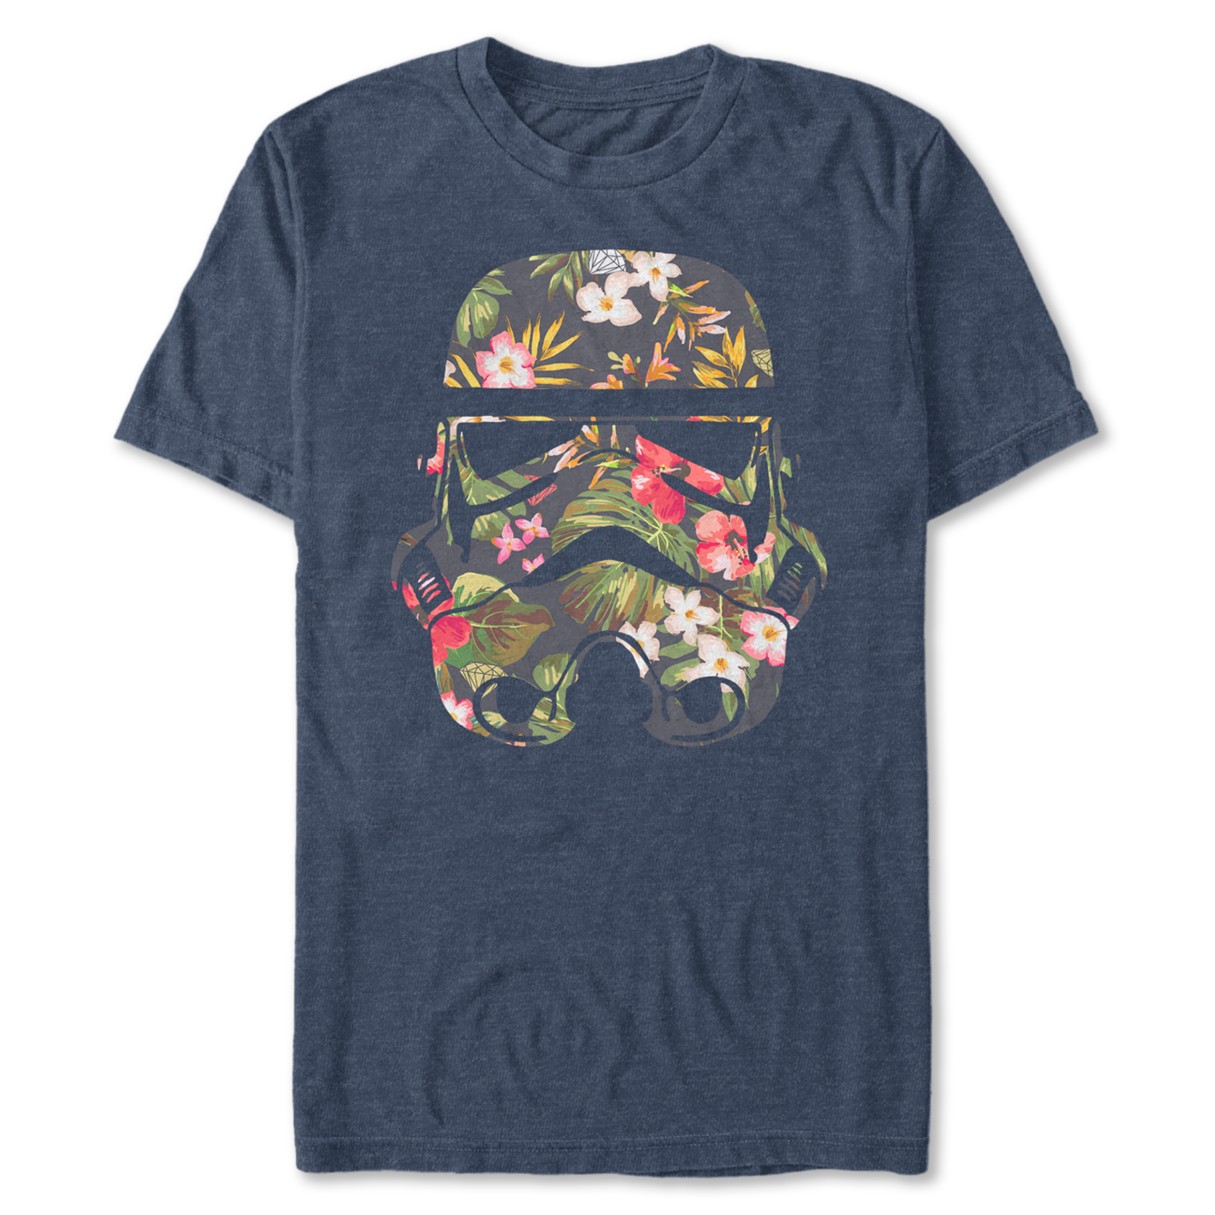 Stormtrooper Flower Helmet T-Shirt for Adults – Star Wars